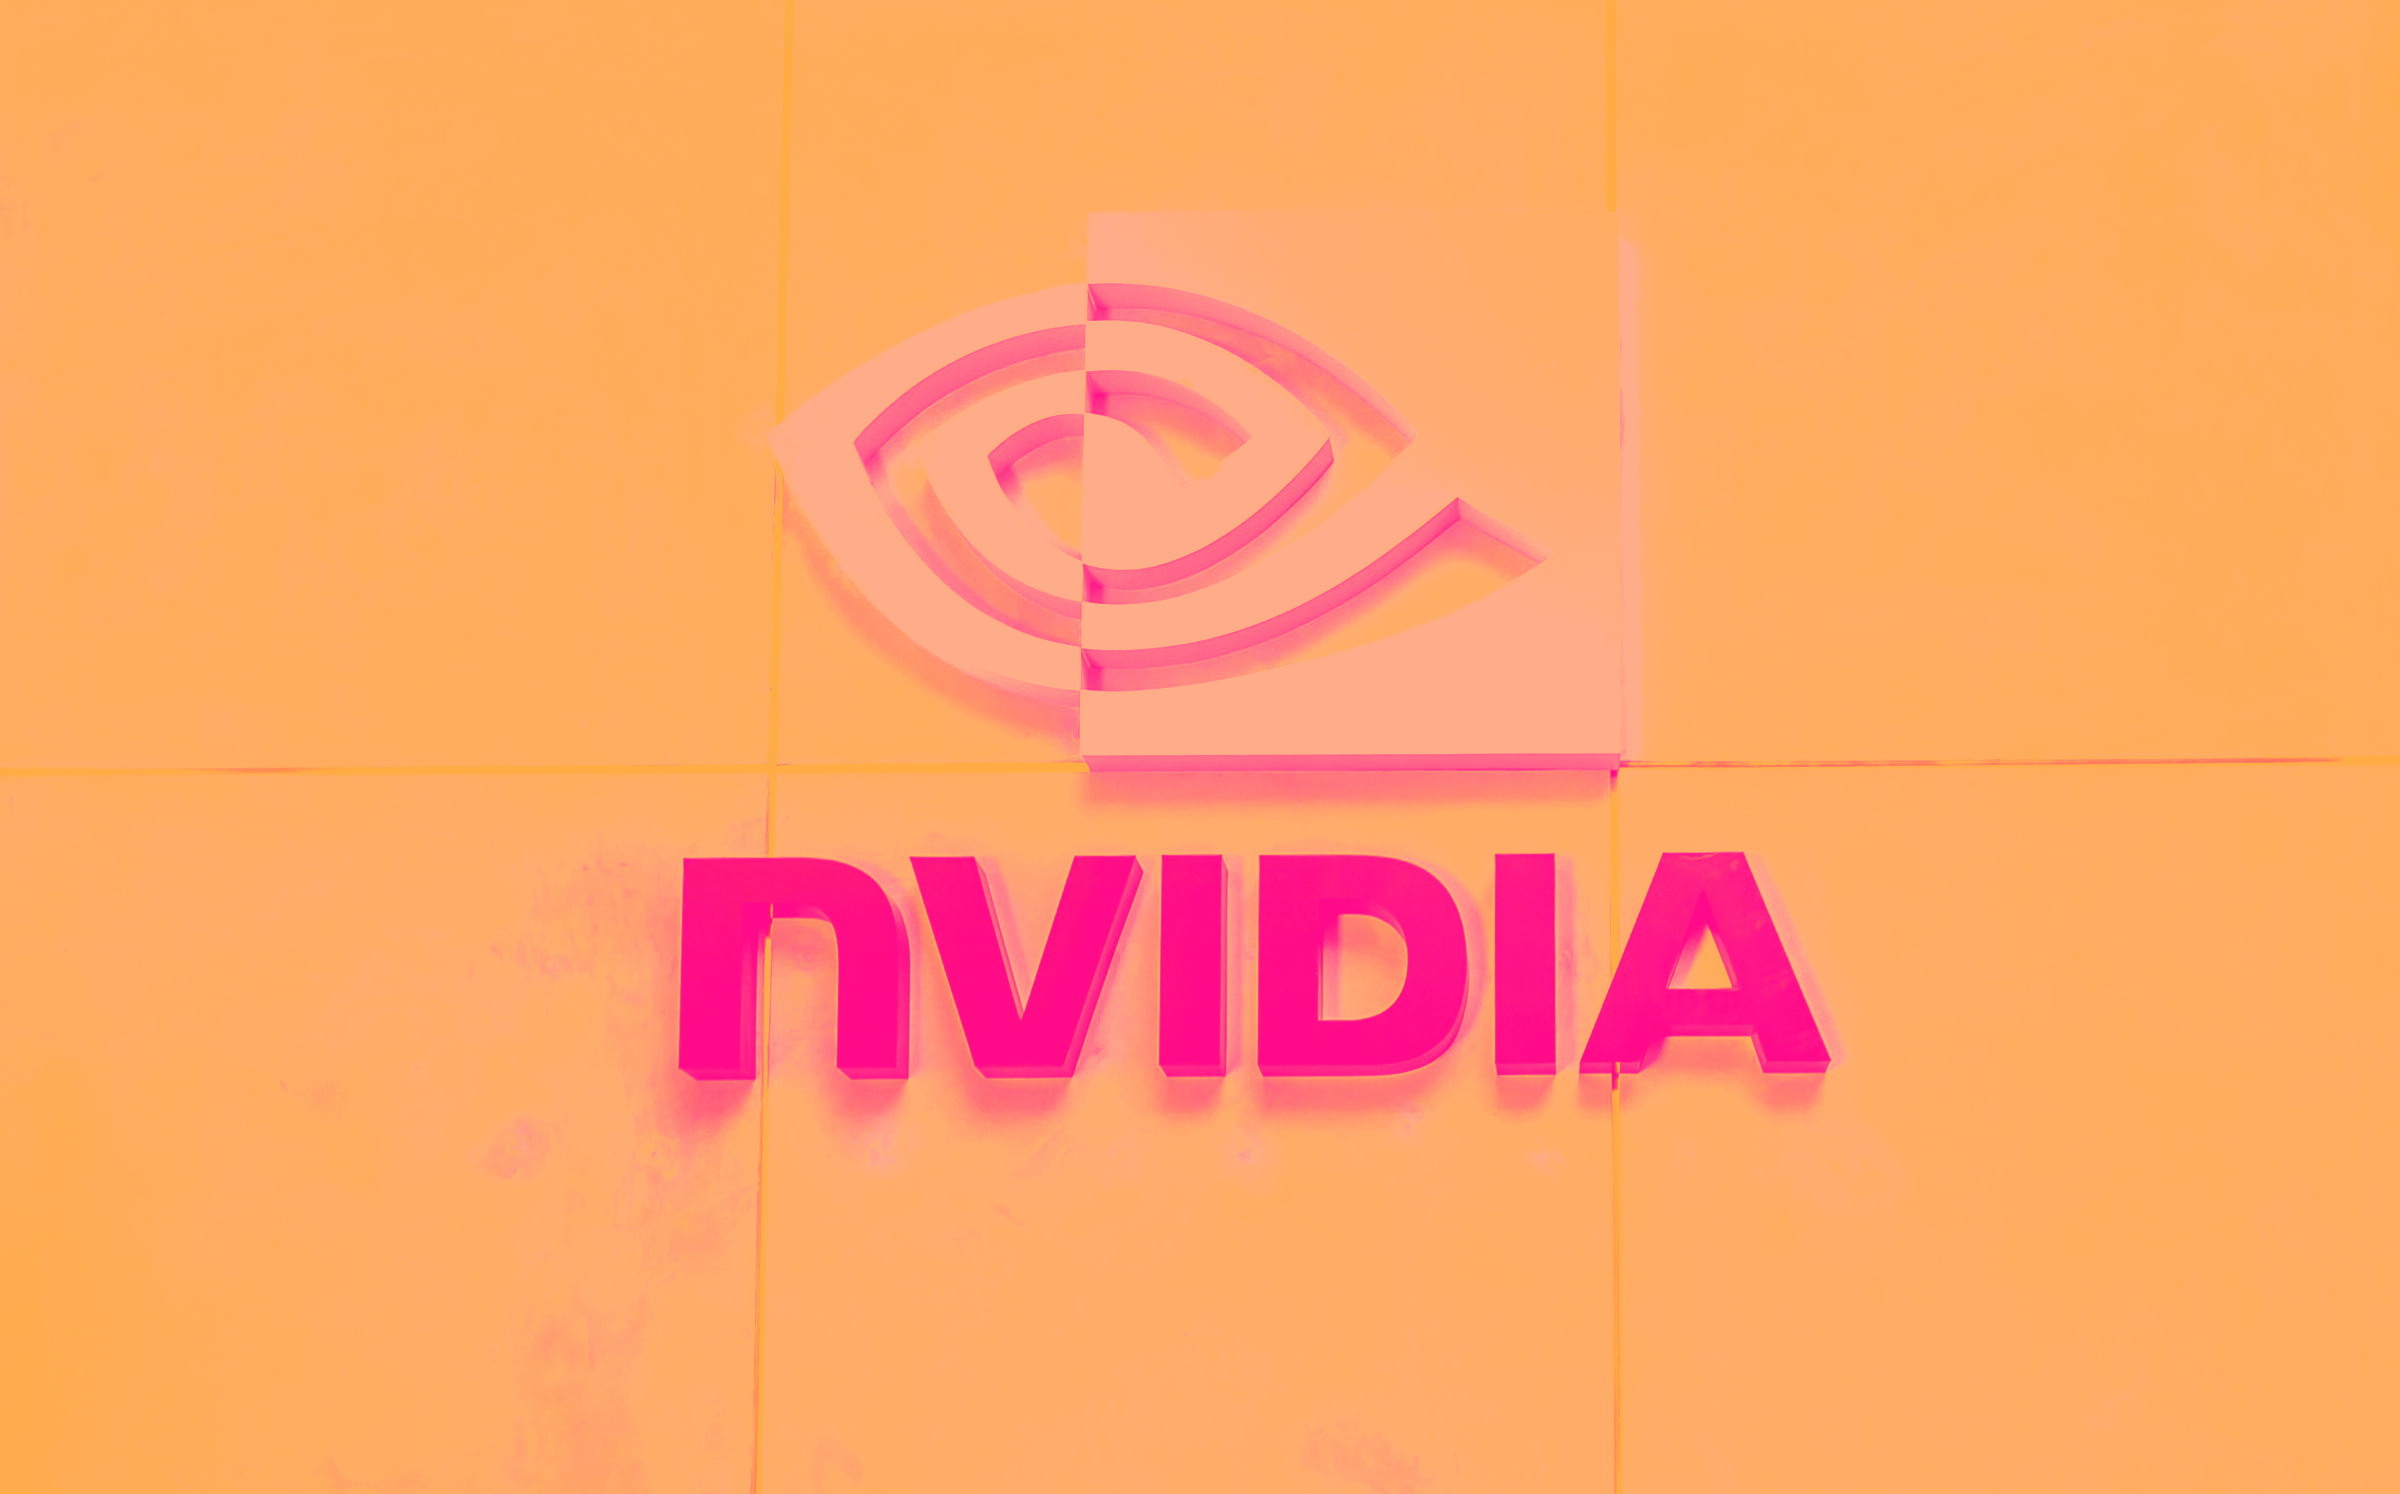 Nvidia corporation cover image pz Y Qoywi